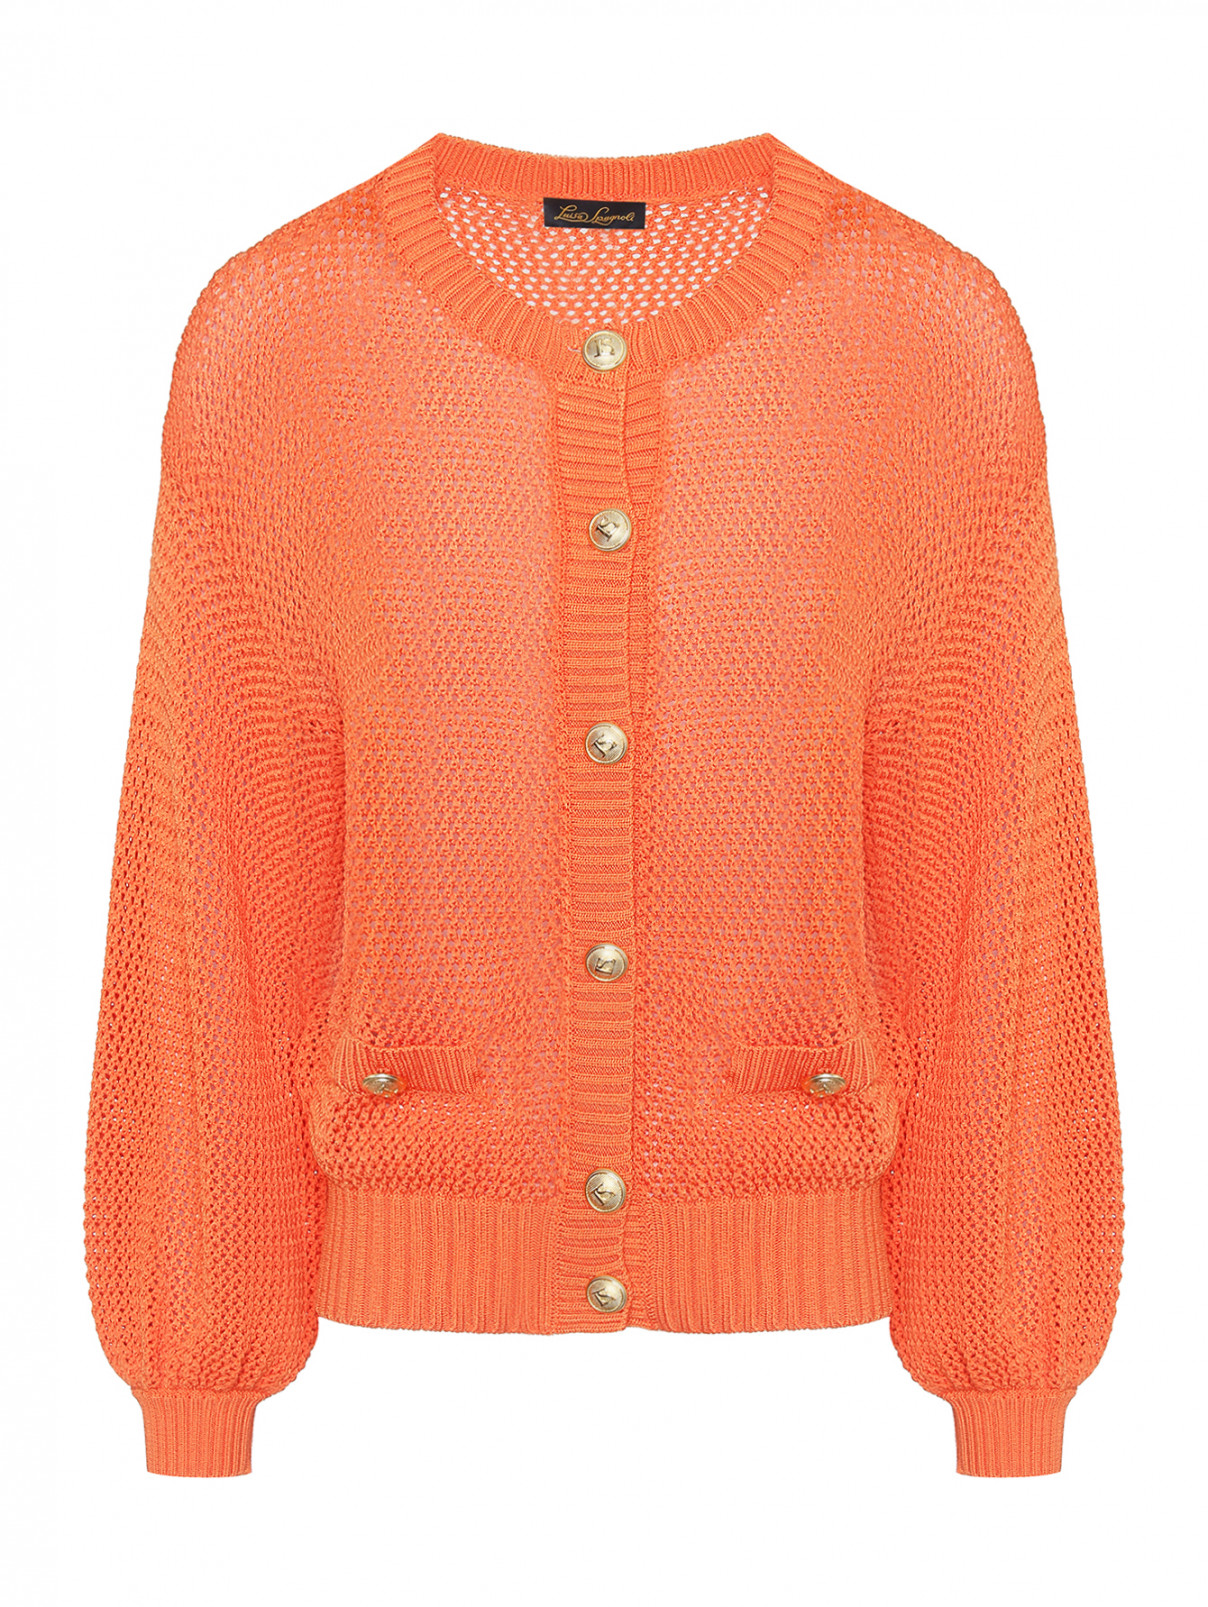 Кардиган ажурной вязки Luisa Spagnoli  –  Общий вид  – Цвет:  Оранжевый